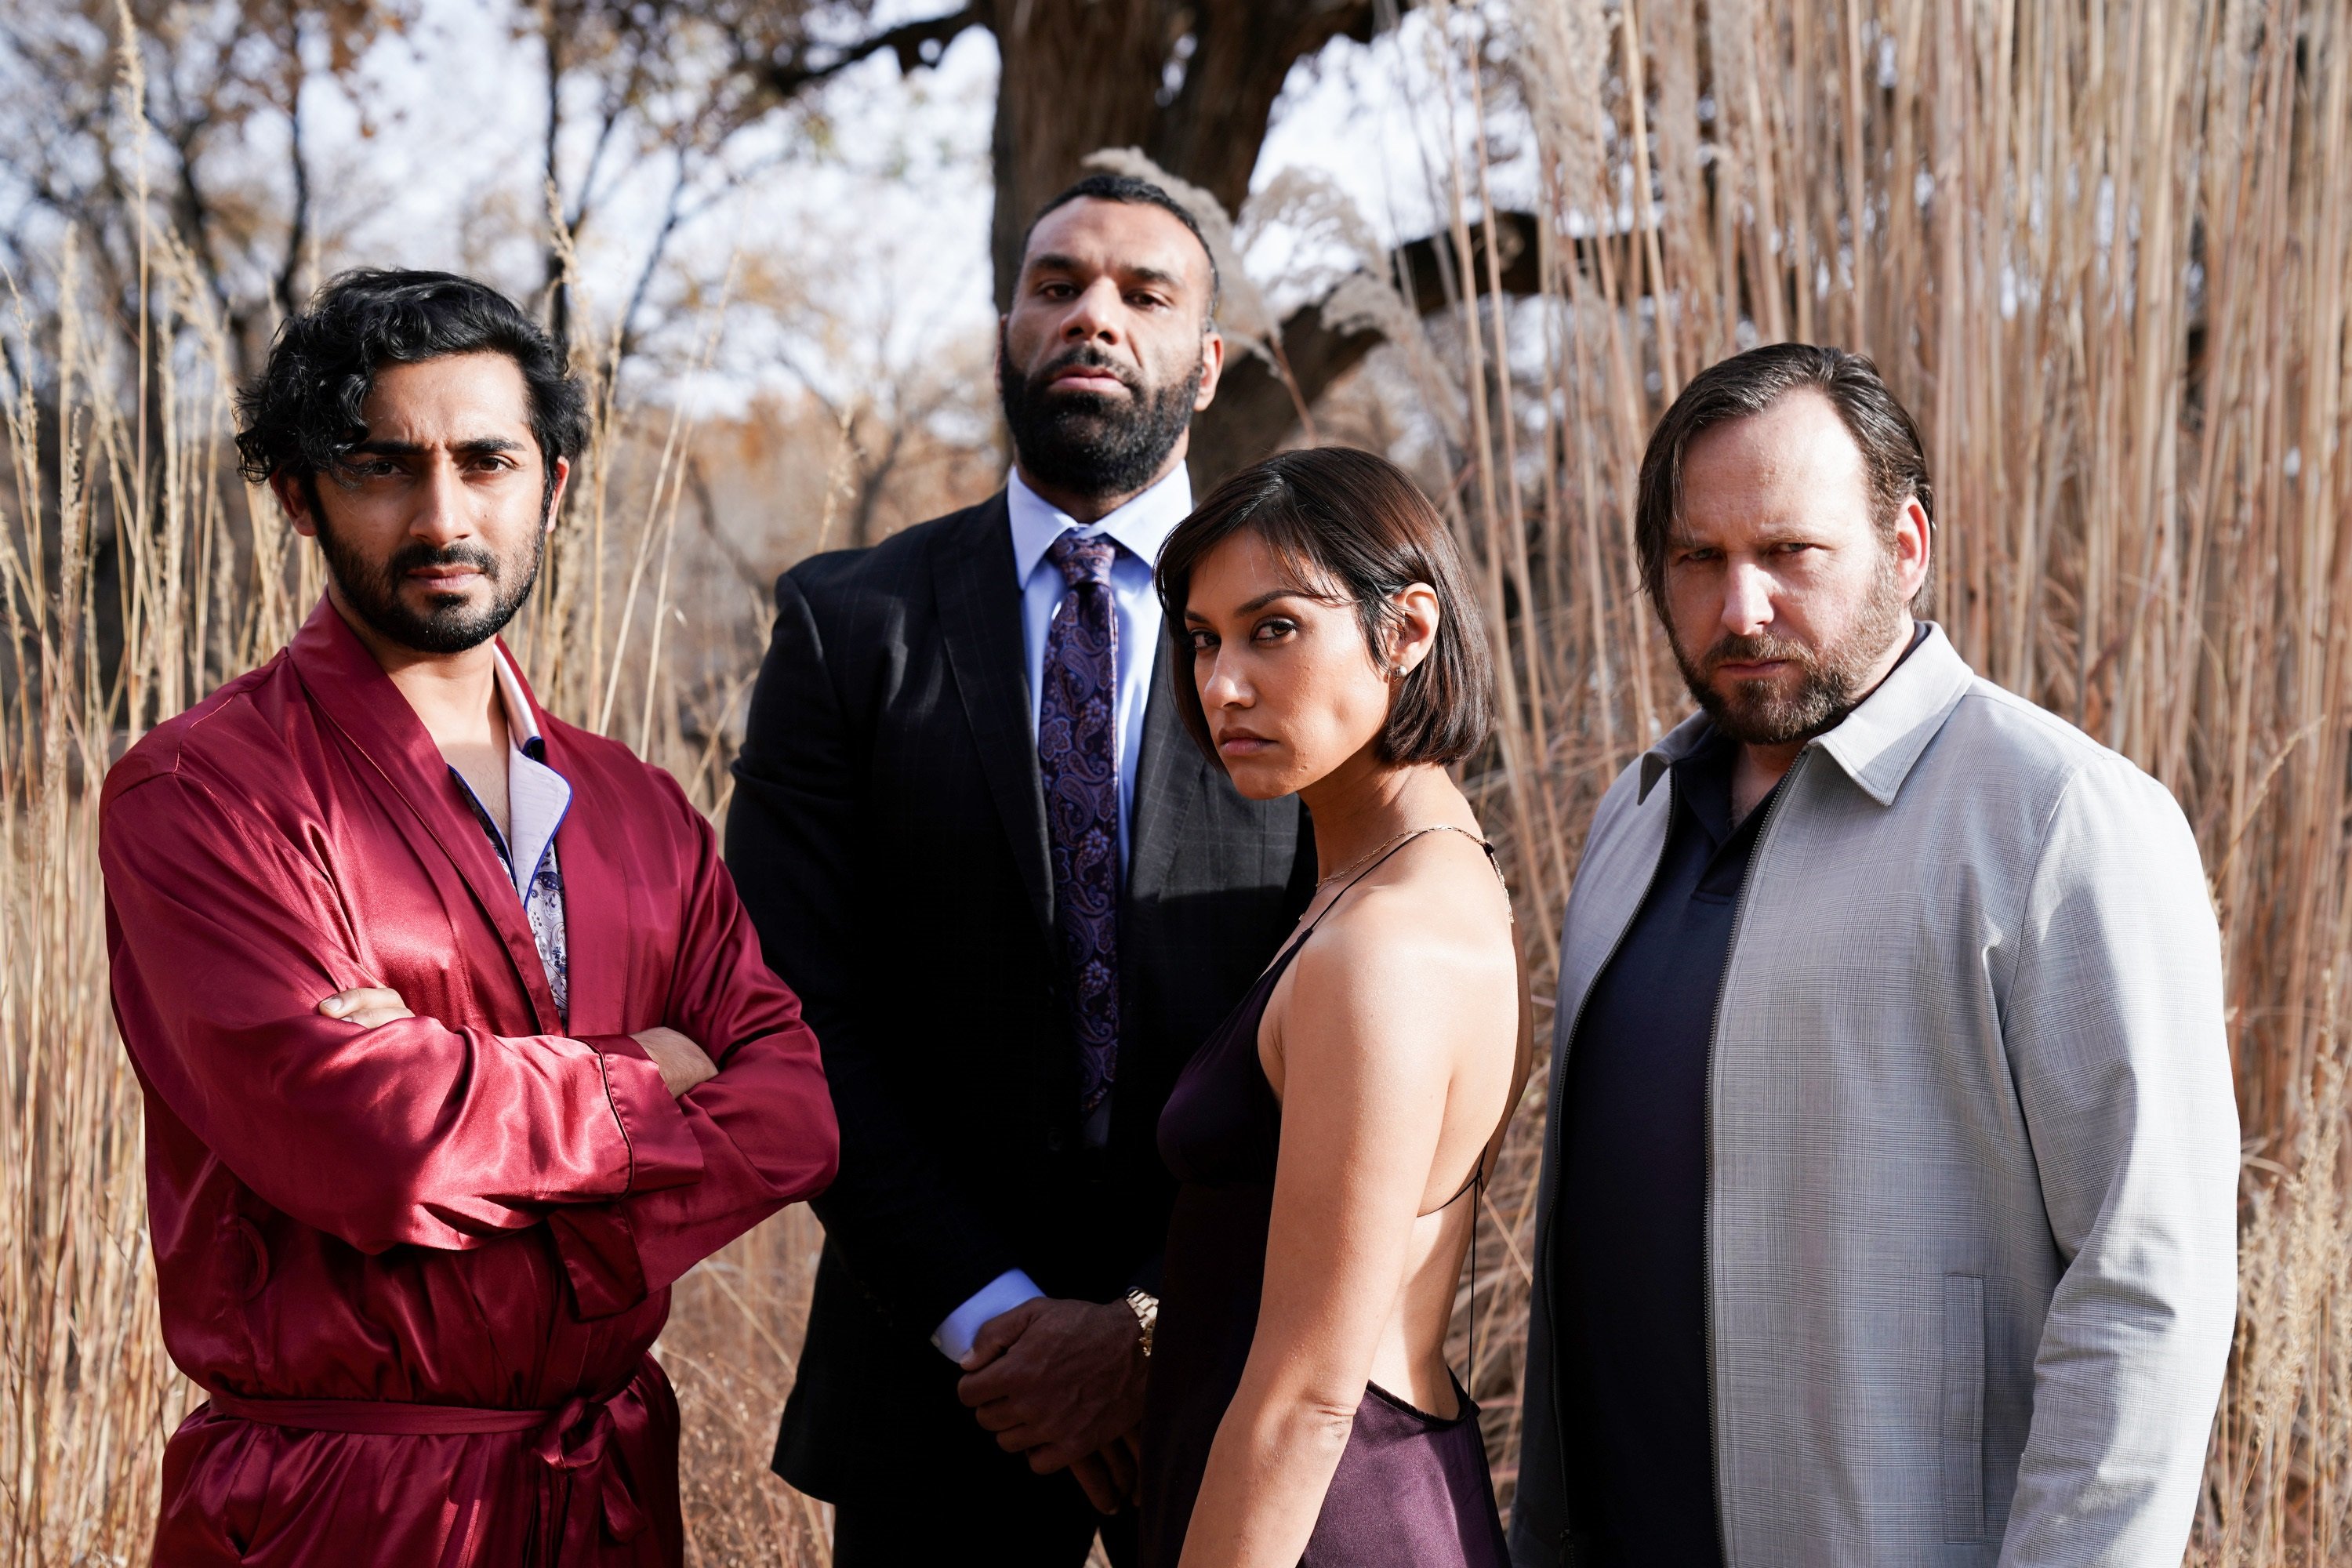 'Big Sky' Season 2 cast members Vinny Chhibber, Janina Gavankar, Ryan O'Nan, and Jinder Mahal